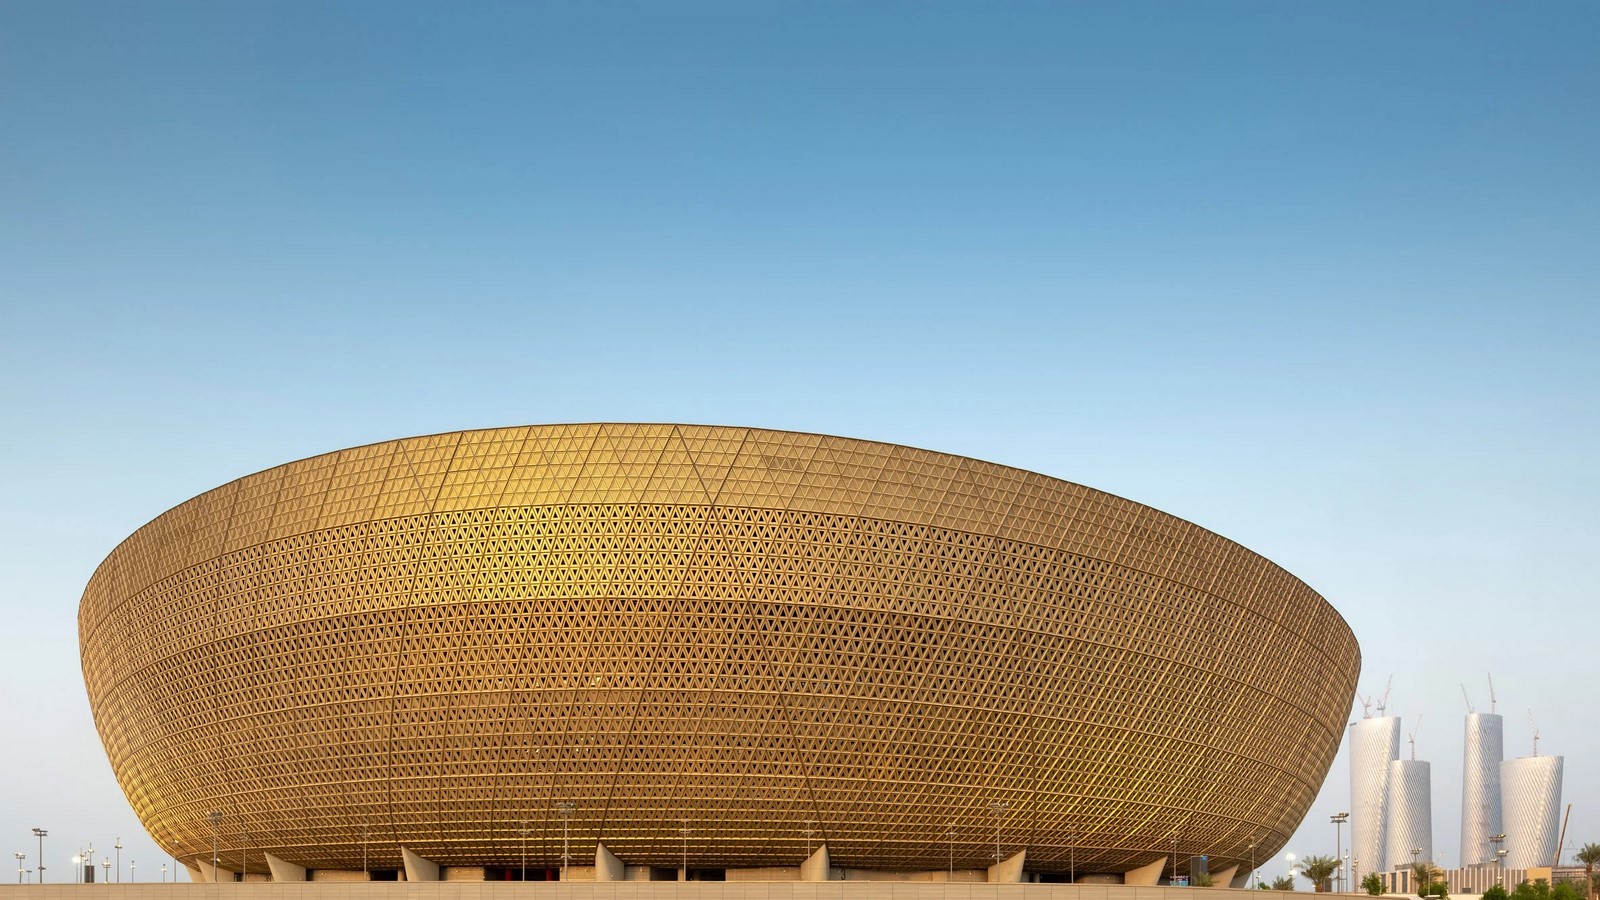 Qatar World Cup: The sad part behind the construction - Sheet1